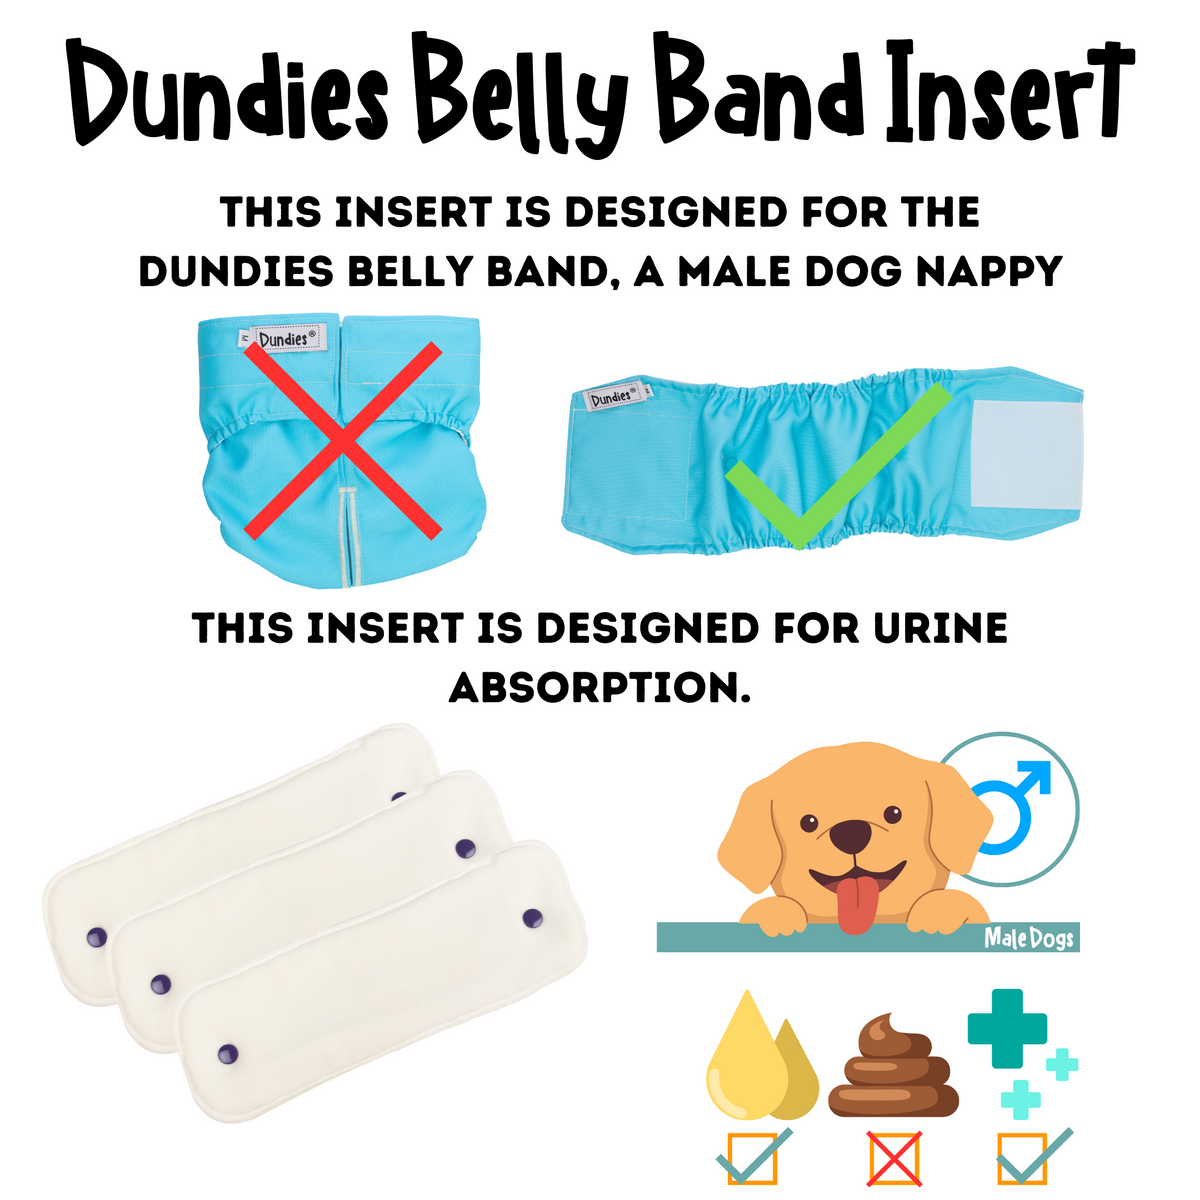 Dundies Belly Band Insert